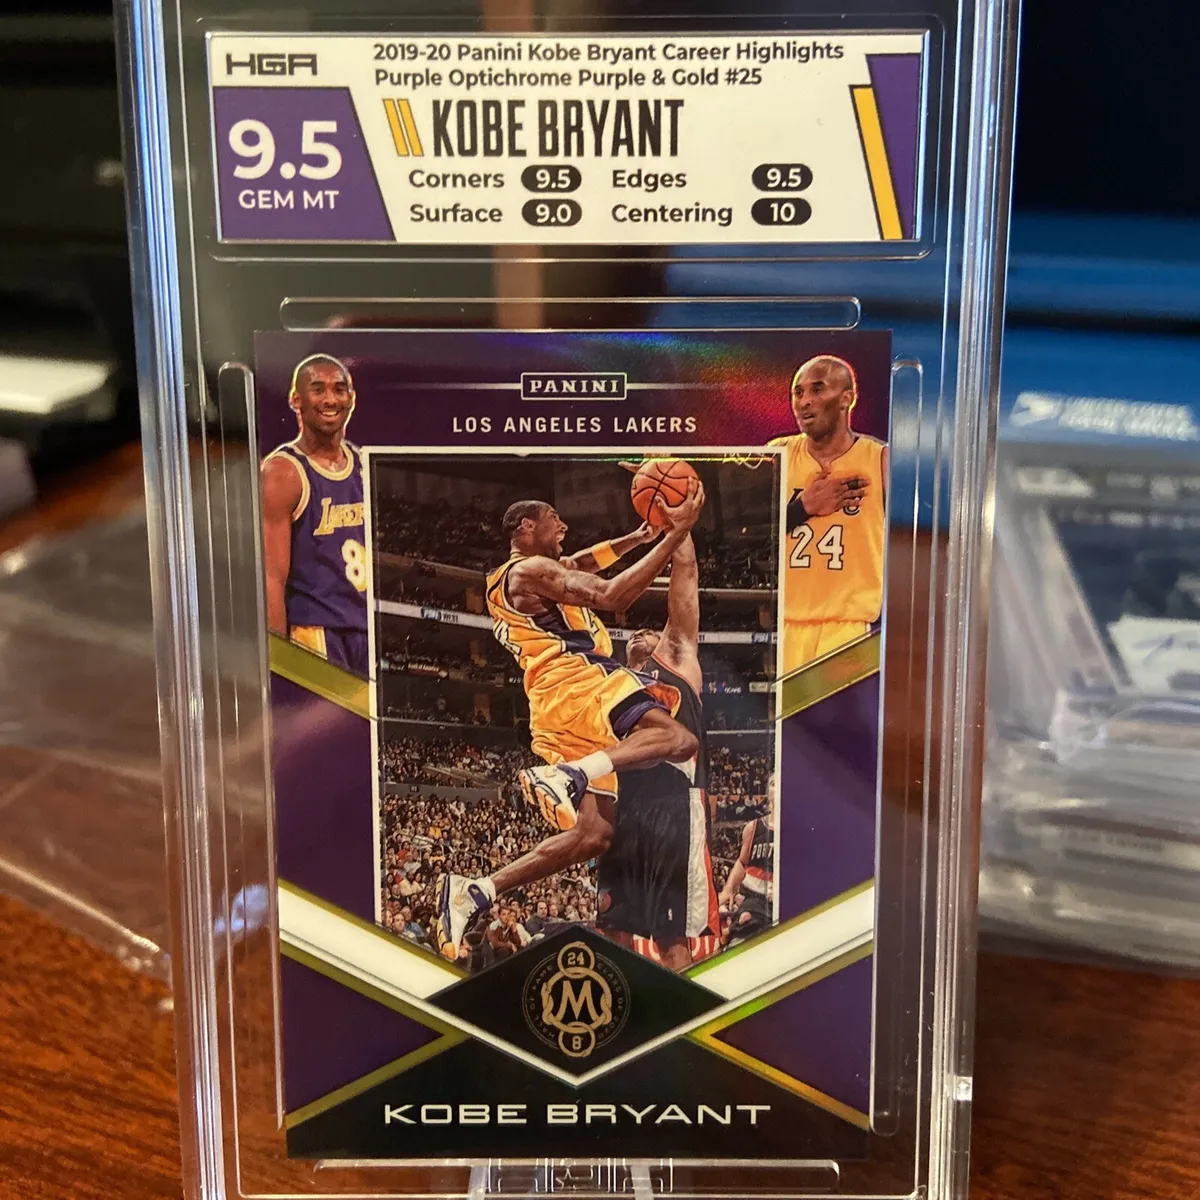 2019 Panini Kobe Bryant highlights 1/1